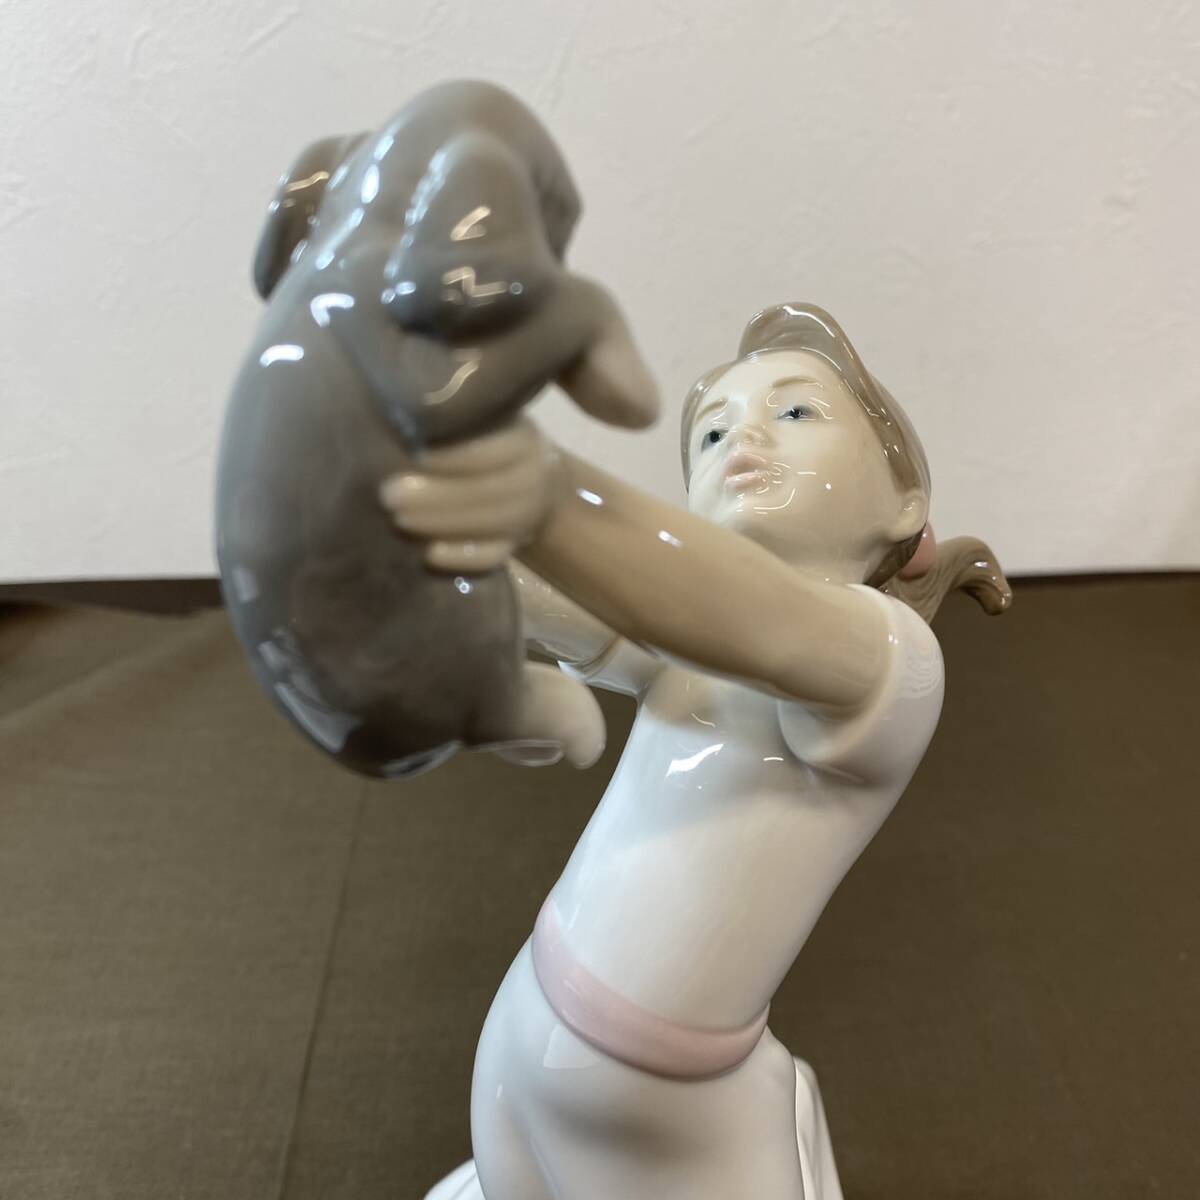 【MH-7237】中古品 LLADRO リヤドロ 大好きよ 8032 少女と犬 少女 犬 陶器 フィギュリン 西洋陶器 人形 西洋磁器 置物の画像1